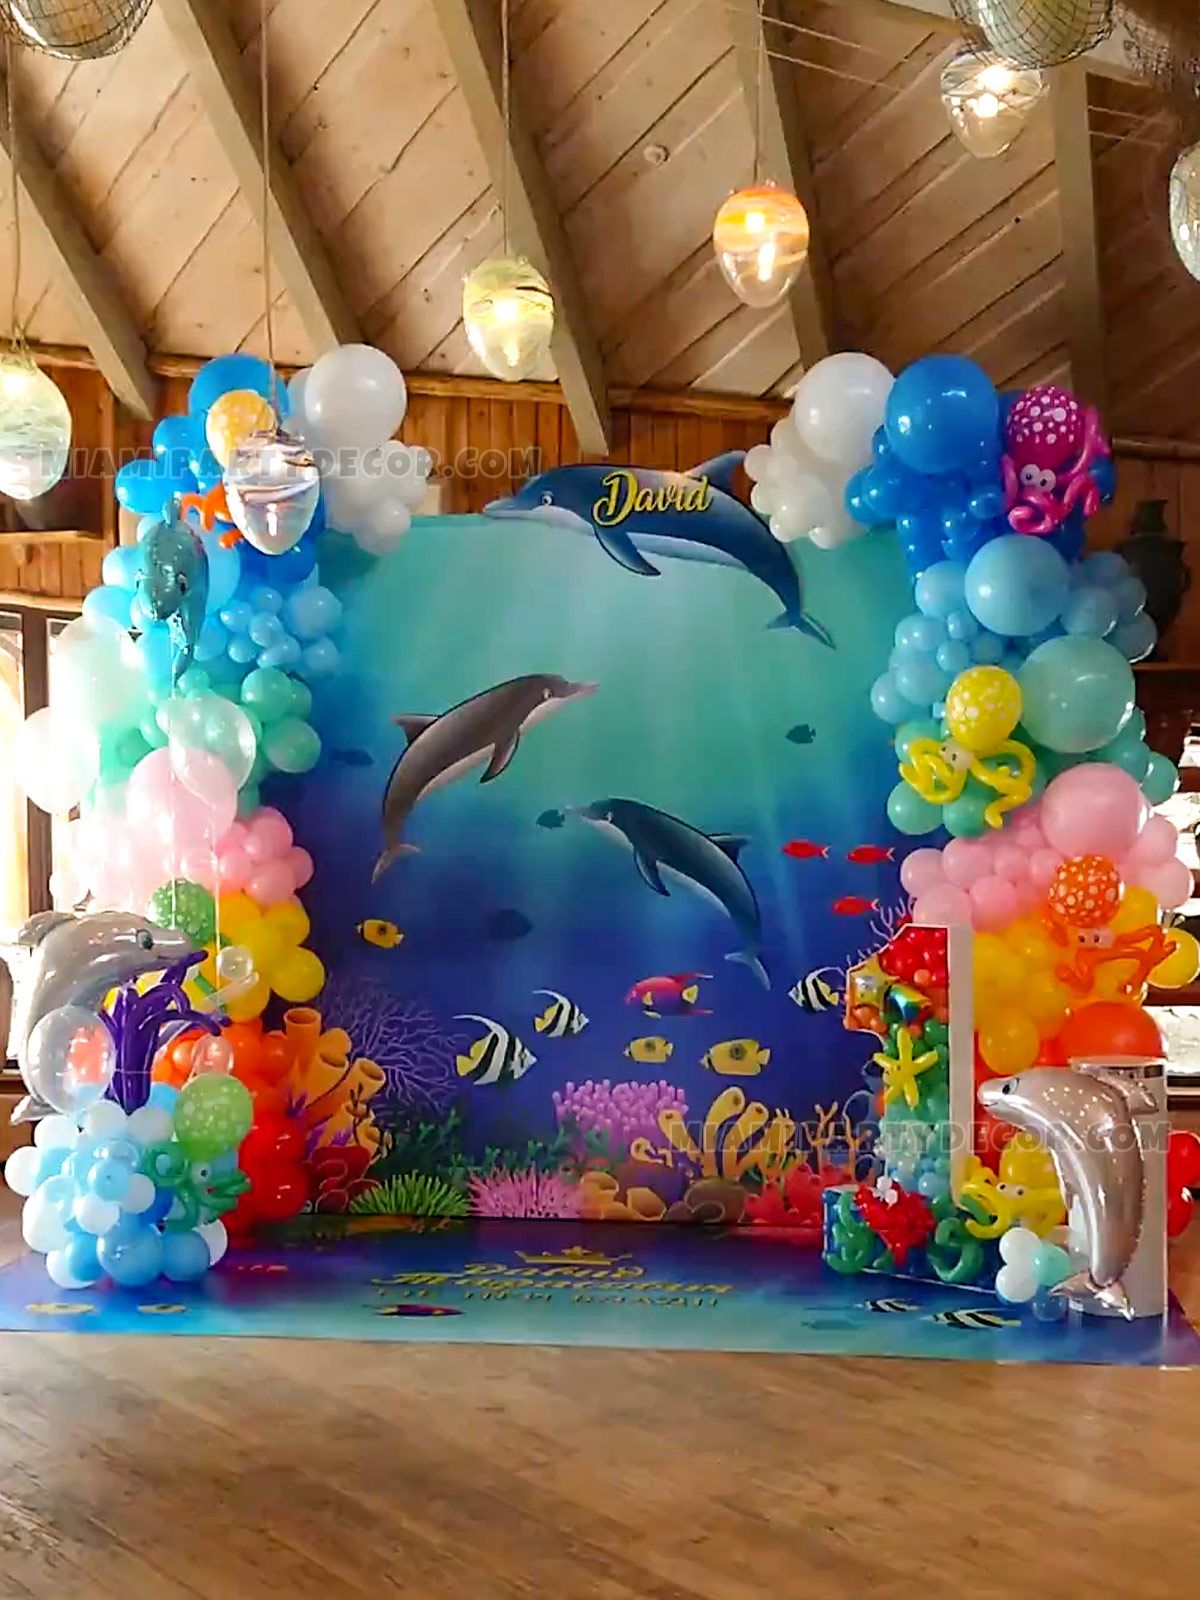 Under The Sea Party Decorations - Miami Party Decor